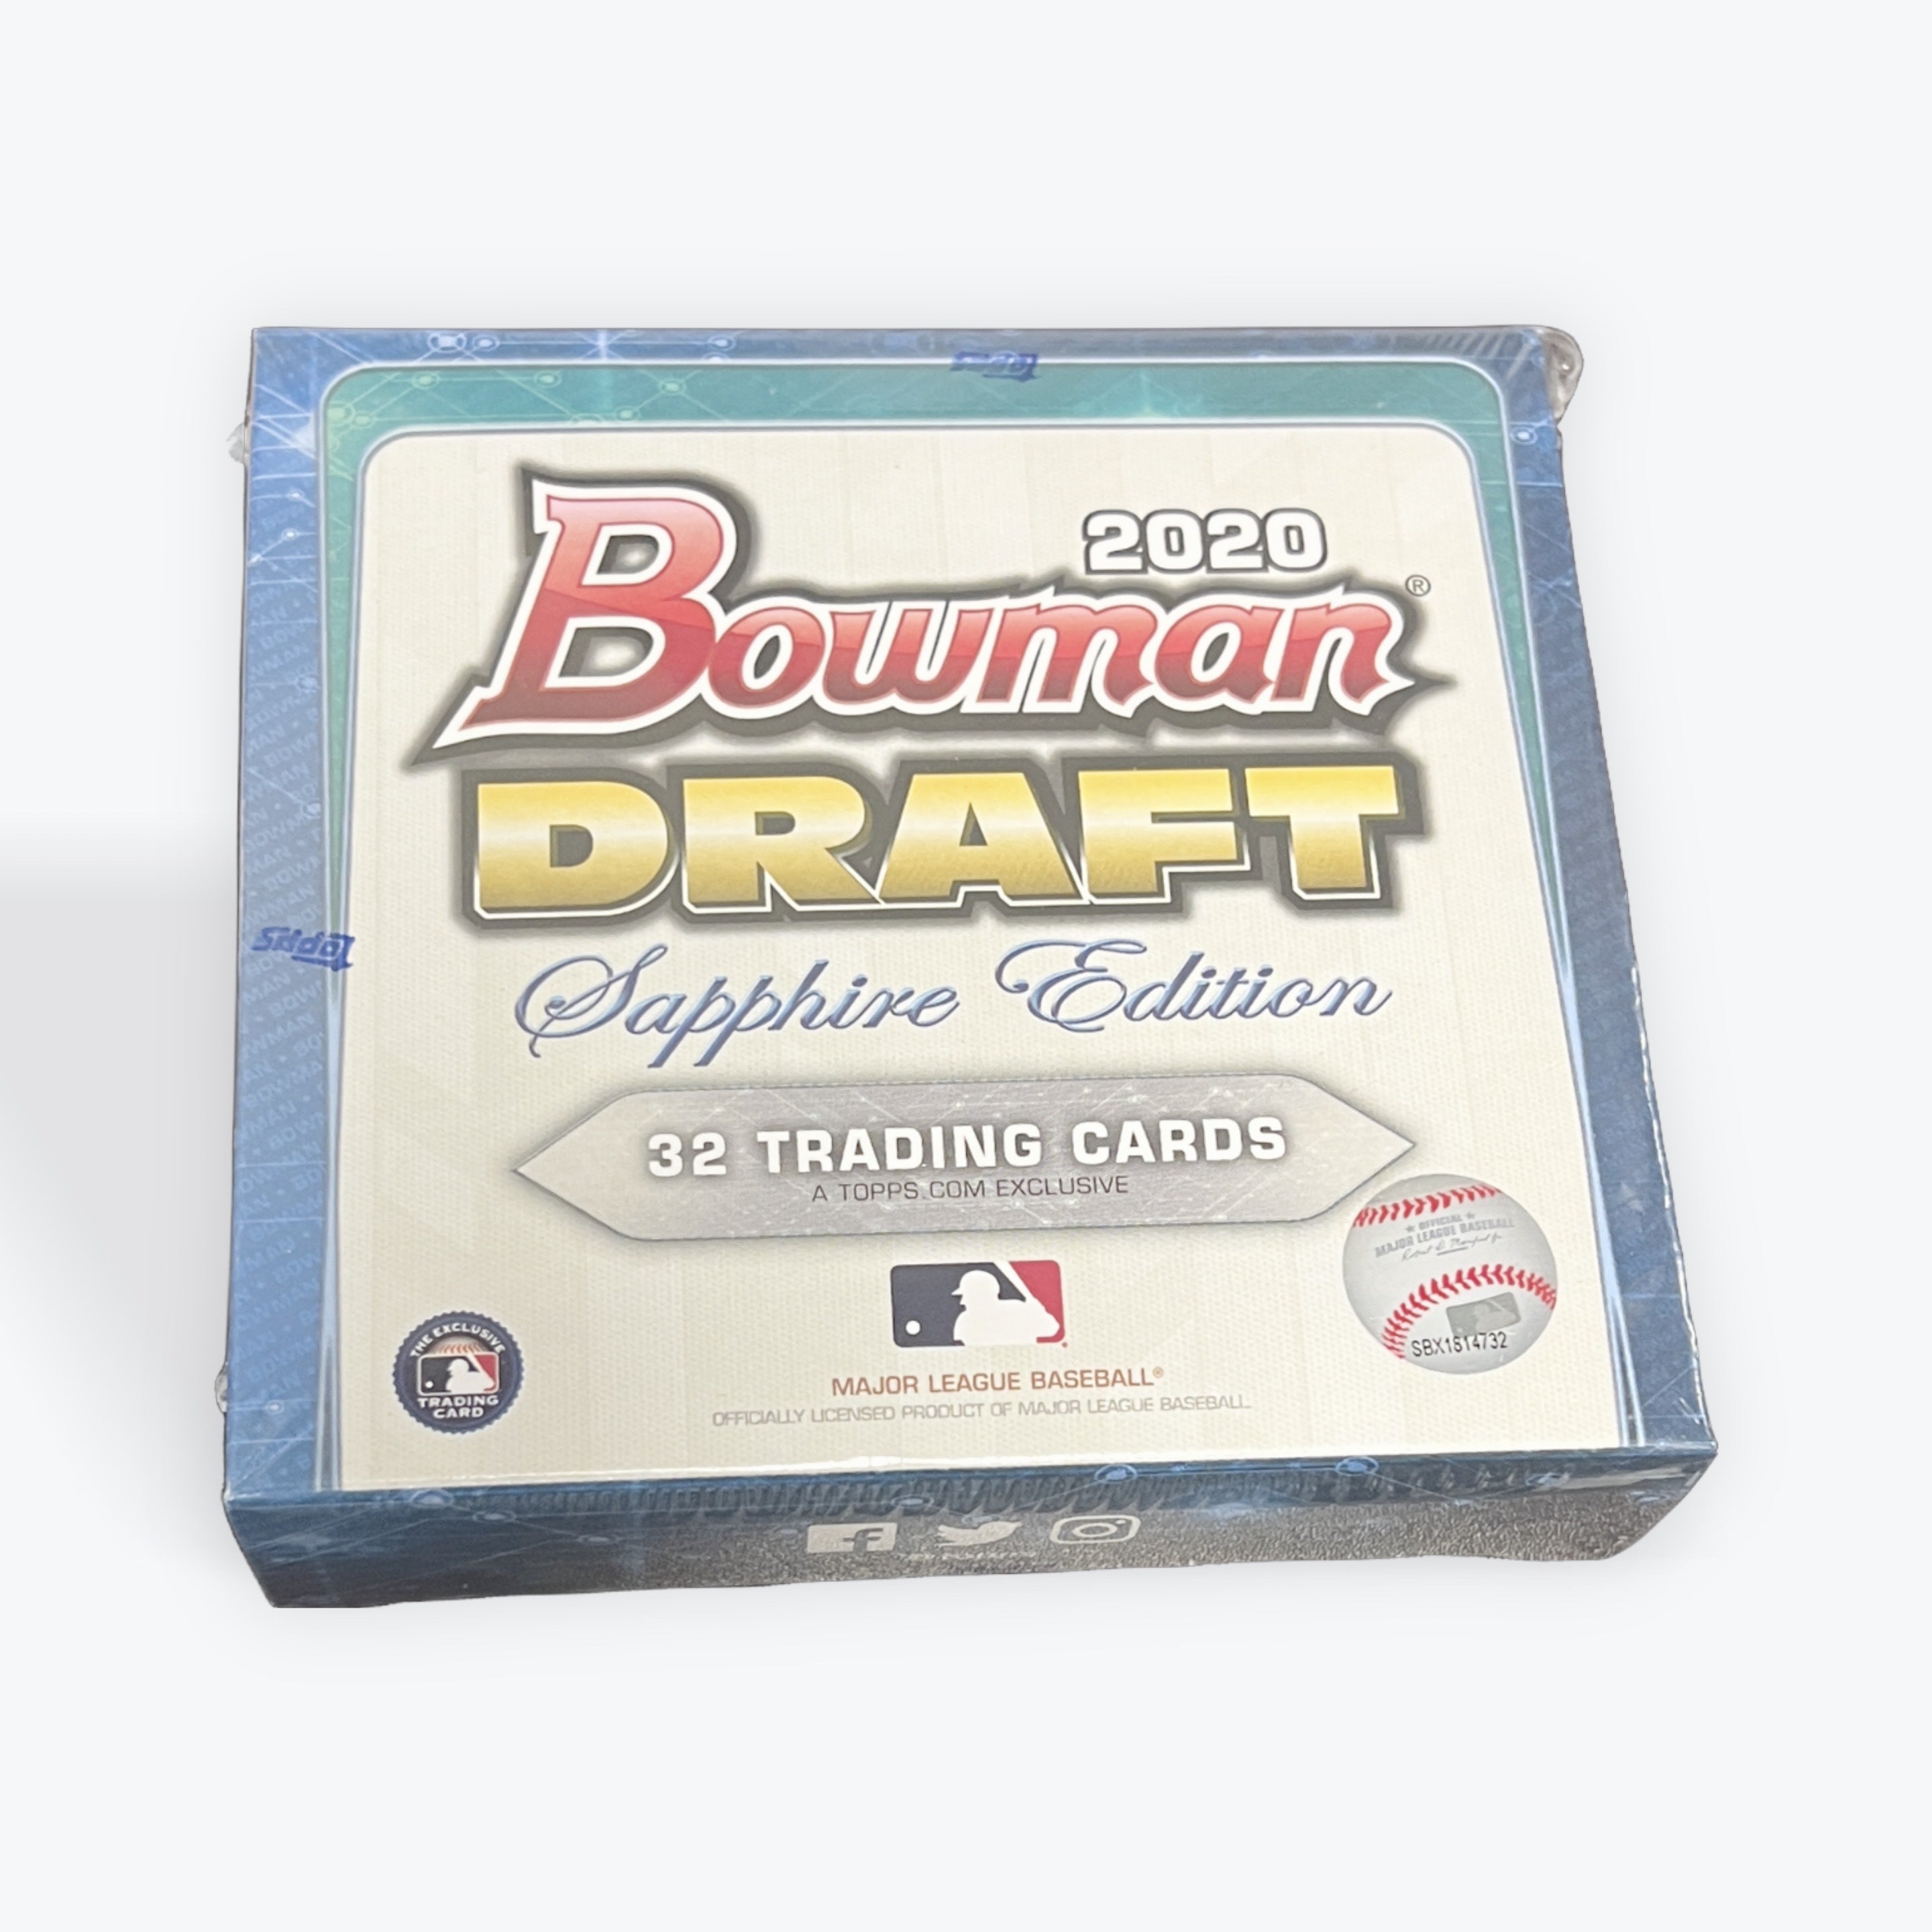 2020 Bowman Draft Baseball Sapphire Edition Box (Chasing Cardboard)